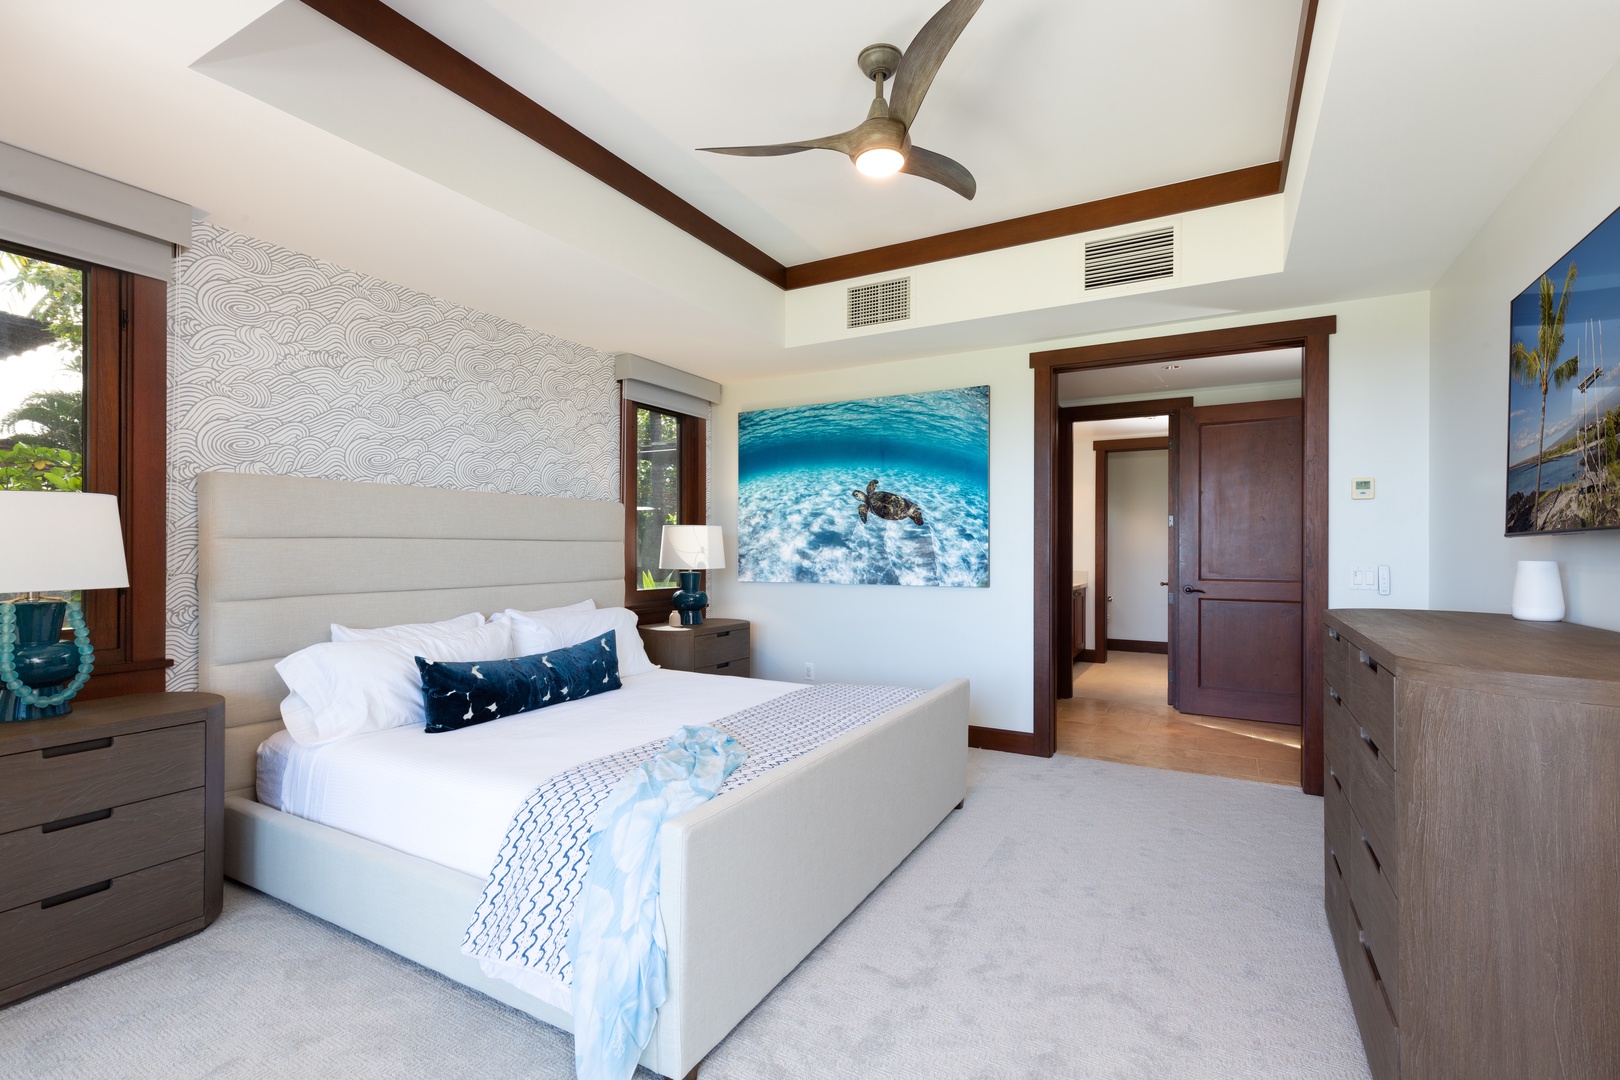 Kailua-Kona Vacation Rentals, 3BD Hali'ipua Villa (120) at Four Seasons Resort at Hualalai - Alternate view of second bedroom with king bed, 55’’ flat screen TV, ensuite bath and private lanai